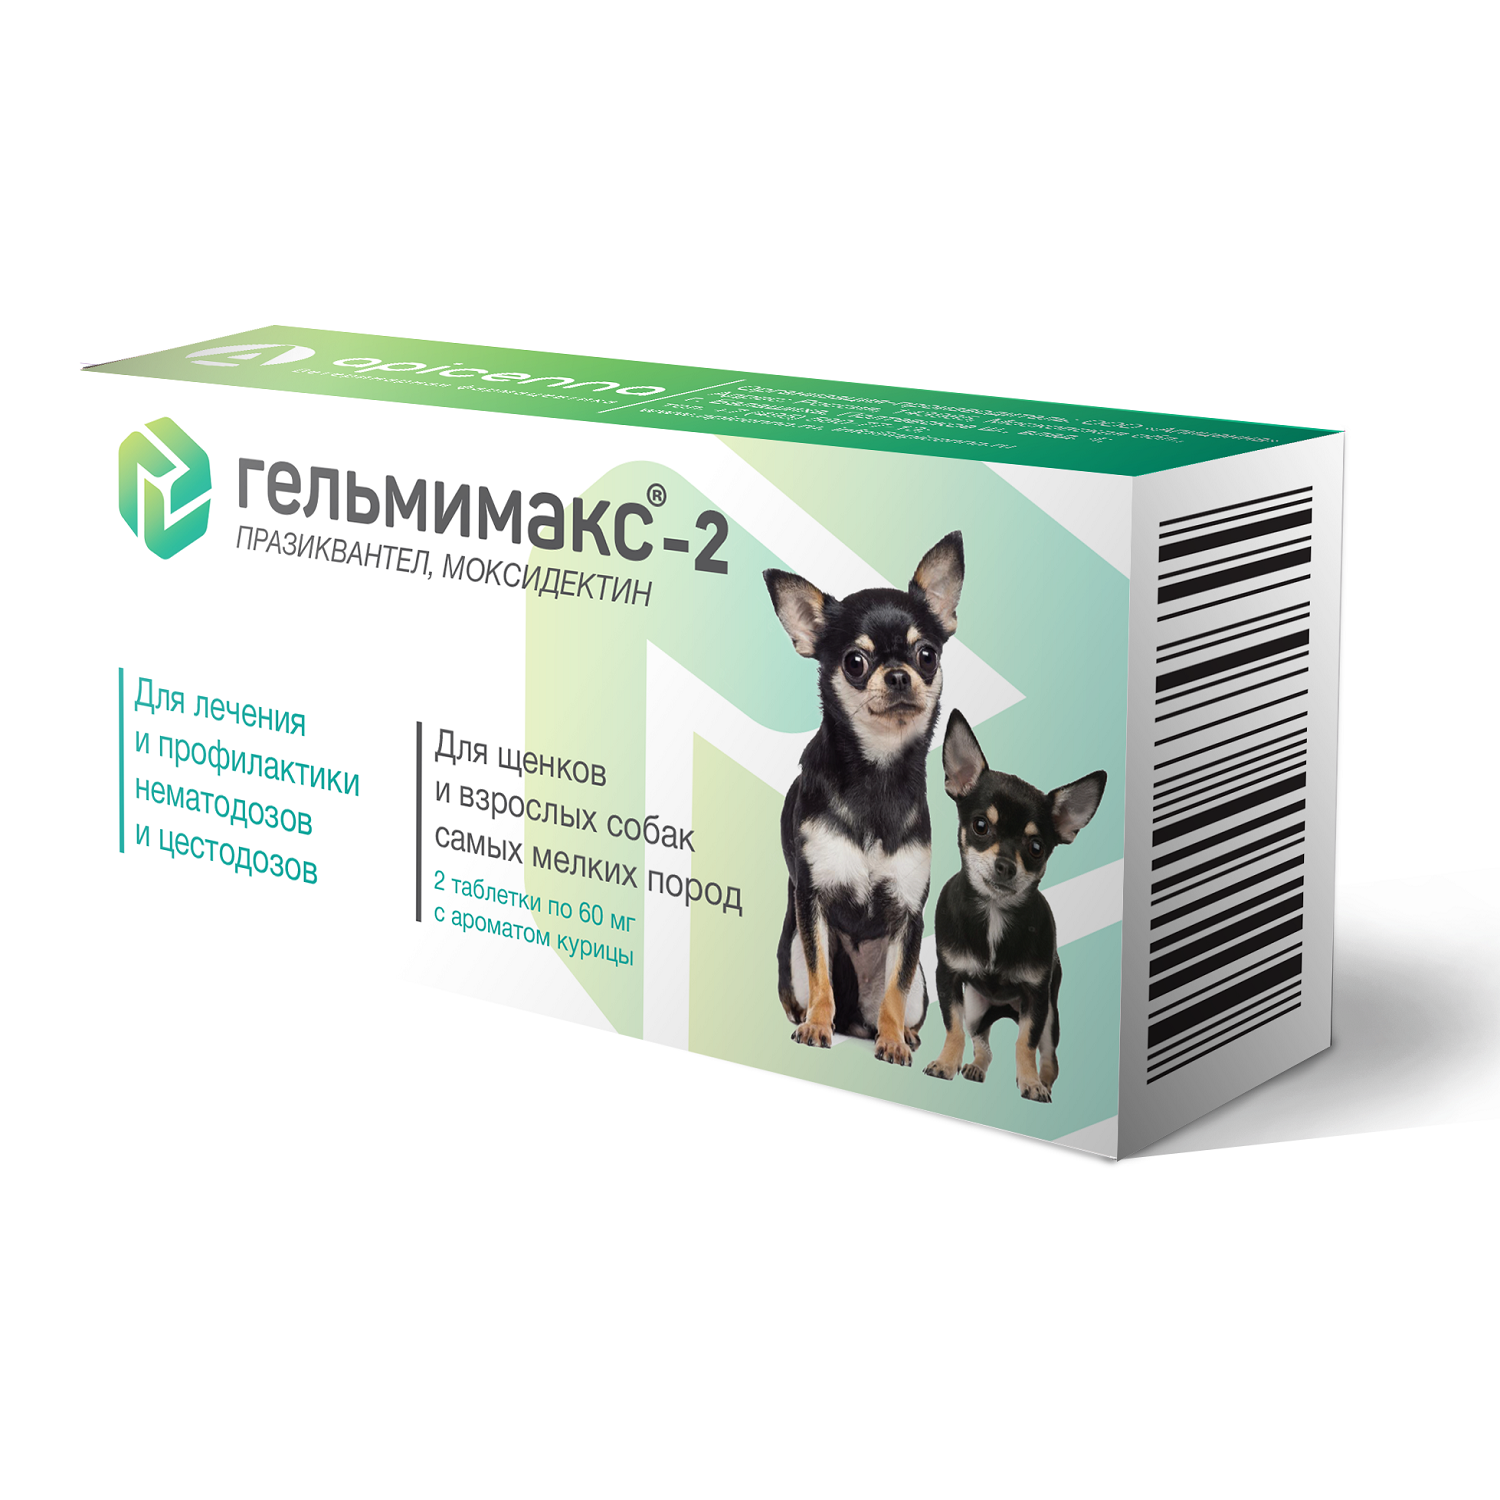 Таблетки для собак и щенков Apicenna Гельмимакс-2 2таблетки*60мг - фото 1